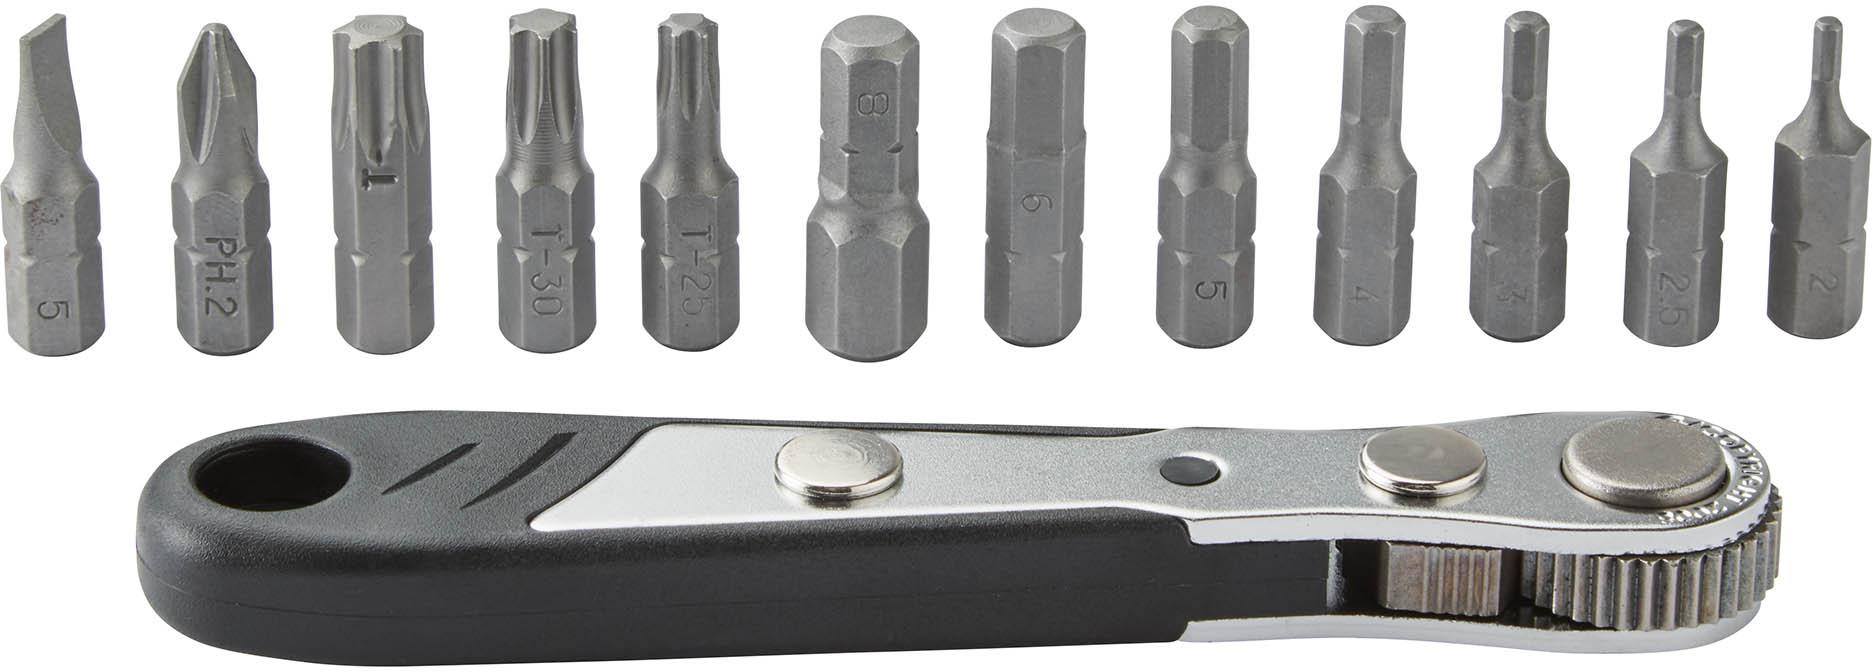 Lifeline Pro Ratchet Wrench Tool Set - Silver / Black